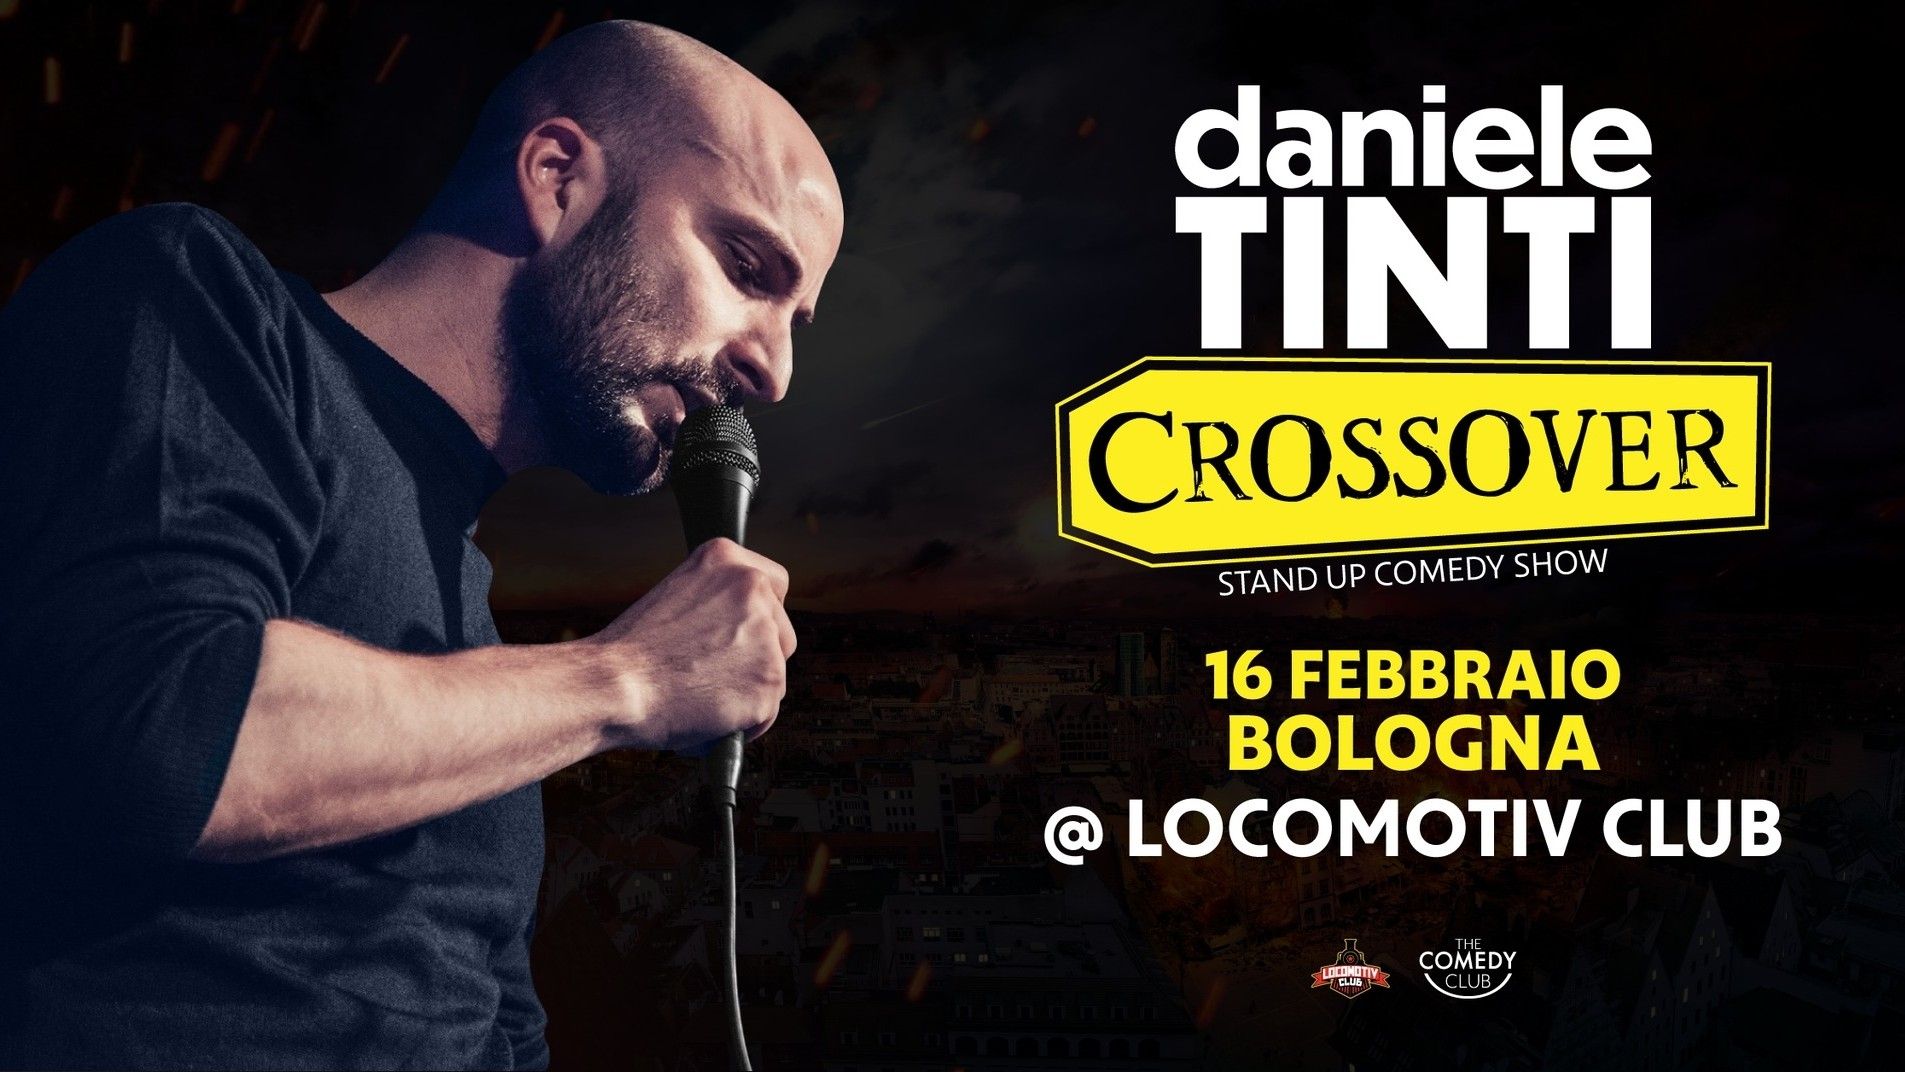 Daniele Tinti in "Crossover"